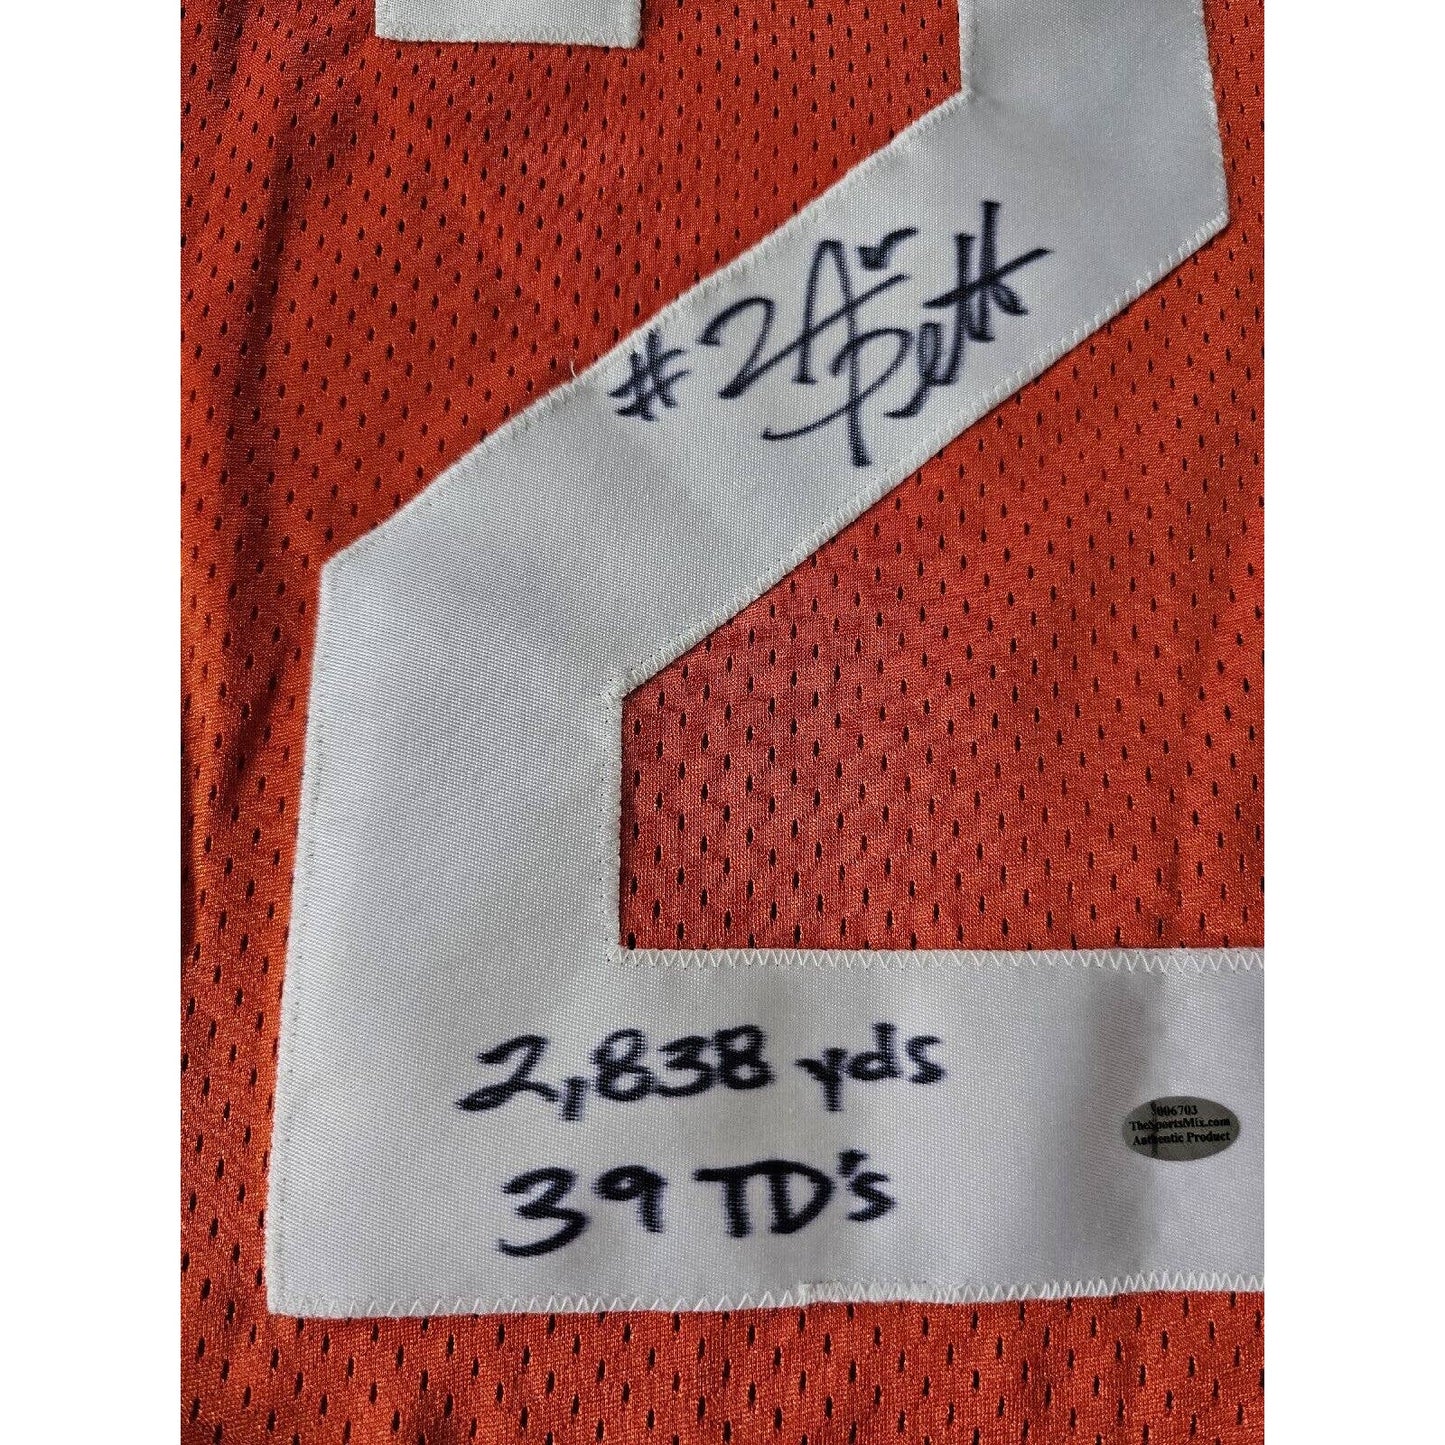 Austin Pettis Autographed/Signed Jersey Boise State Broncos